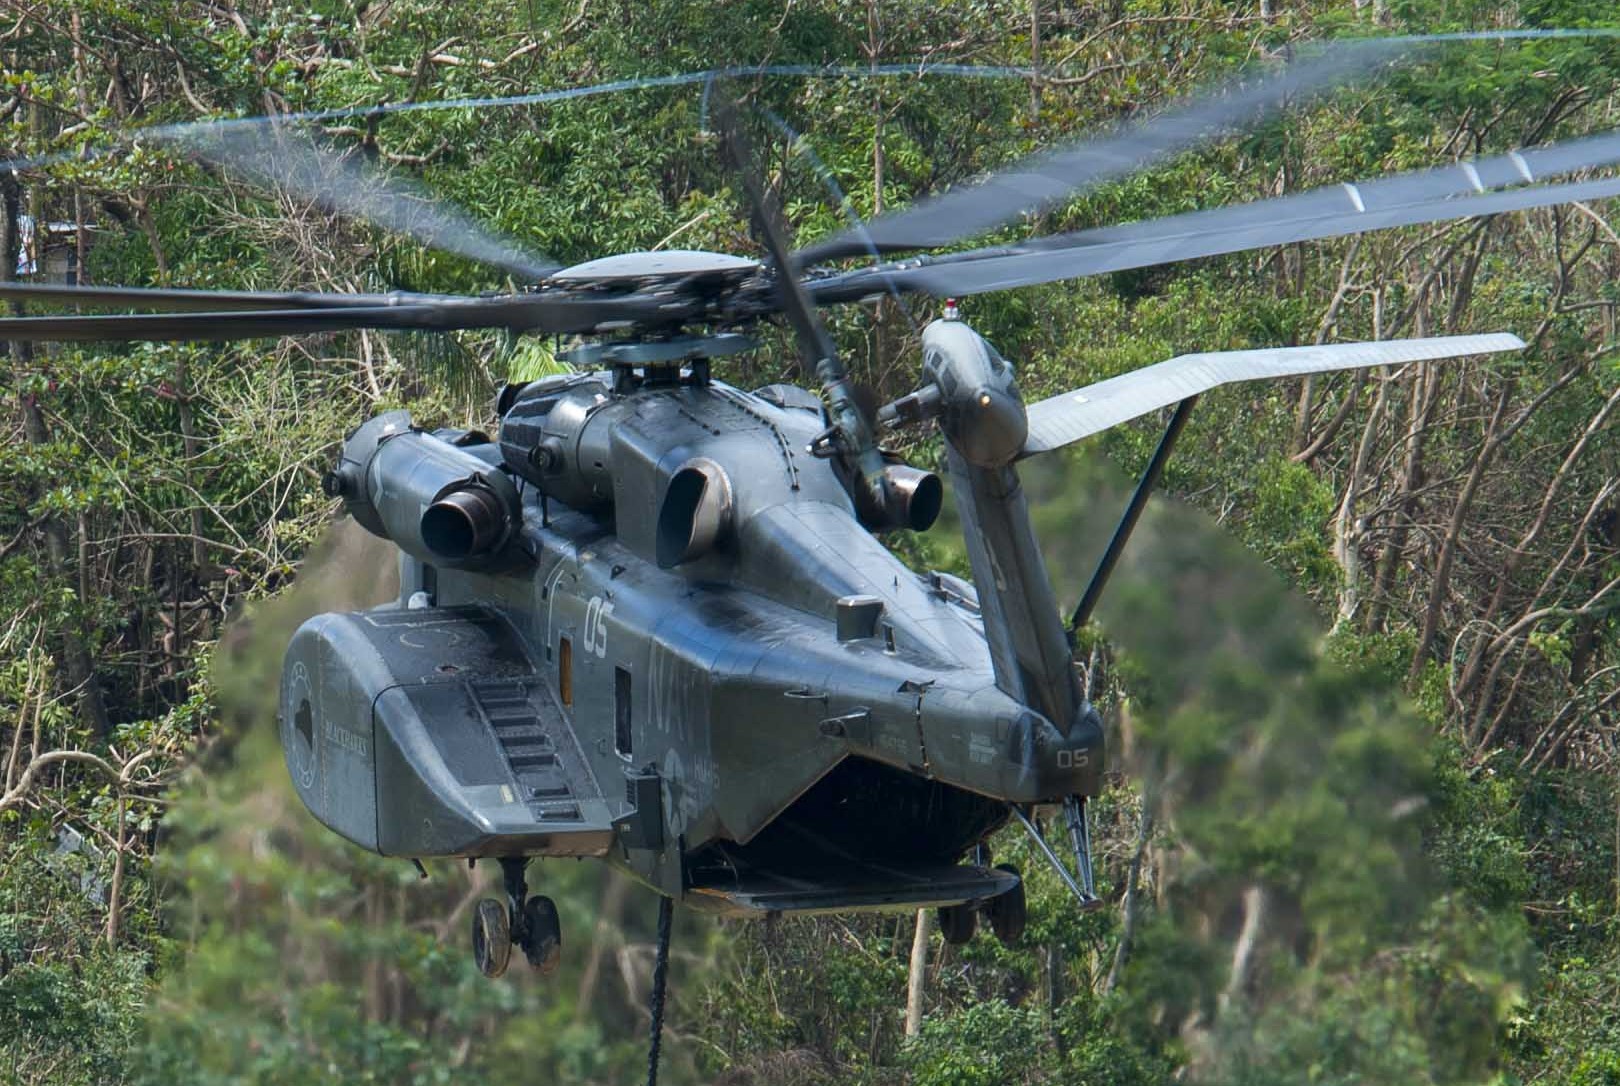 hm-15 blackhawks helicopter mine countermeasures squadron navy mh-53e sea dragon 10